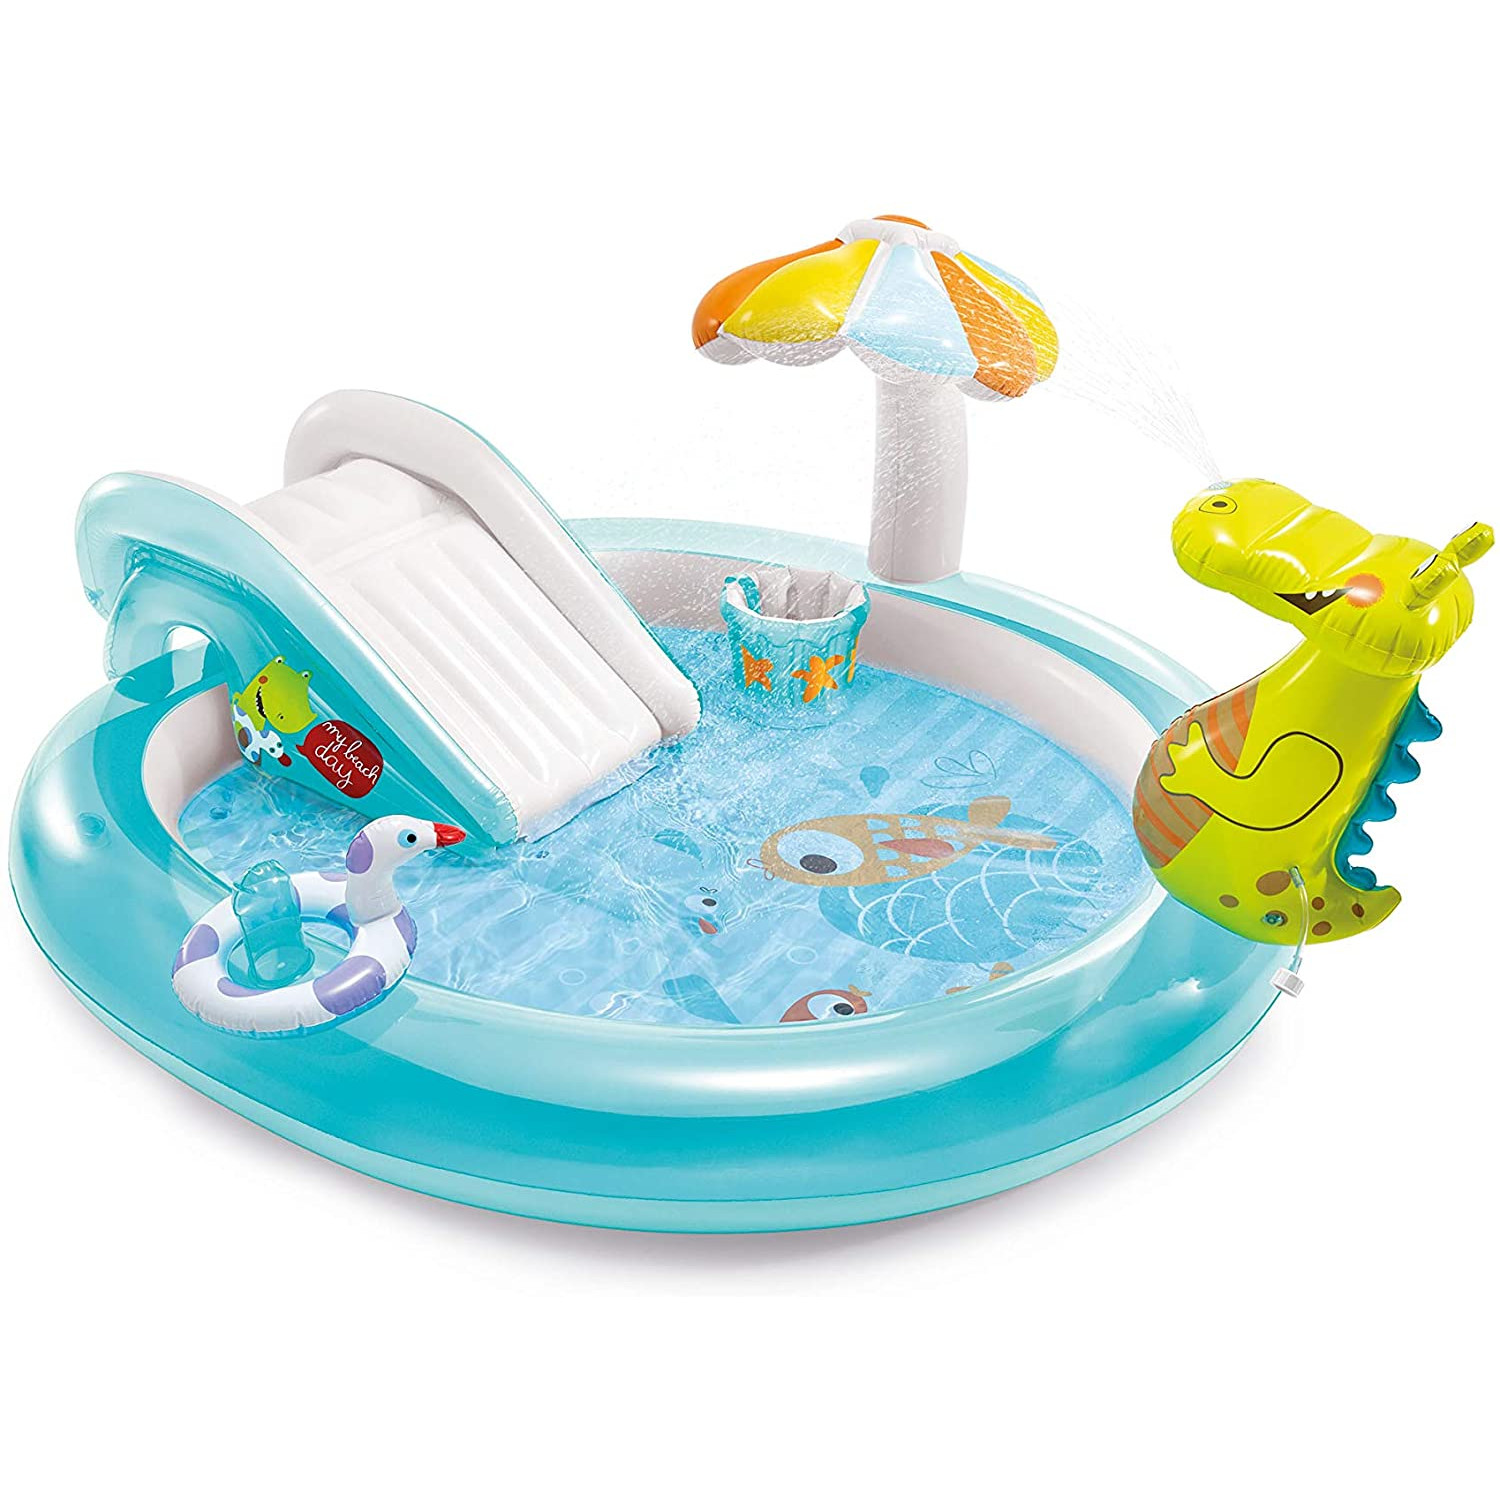 Gator INTEX Wasserspielzeug, Playcenter (201x107x84cm) - mehrfarbig 57165NP -